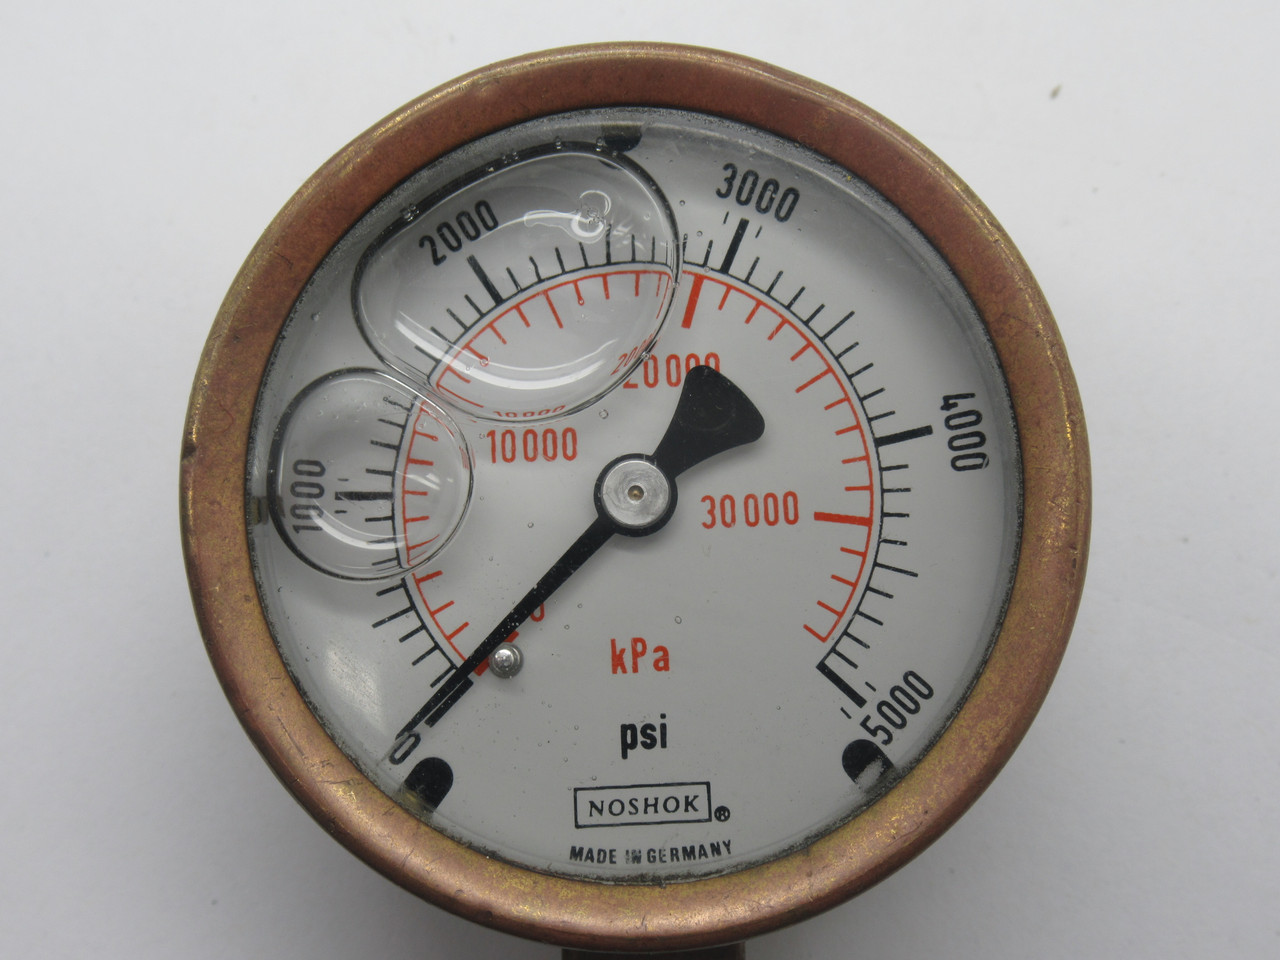 Noshok 25-300-5000-PSI/BAR-1/4 Pressure Gauge 5000psi 2.5" Diam 1/4" MNPT USED